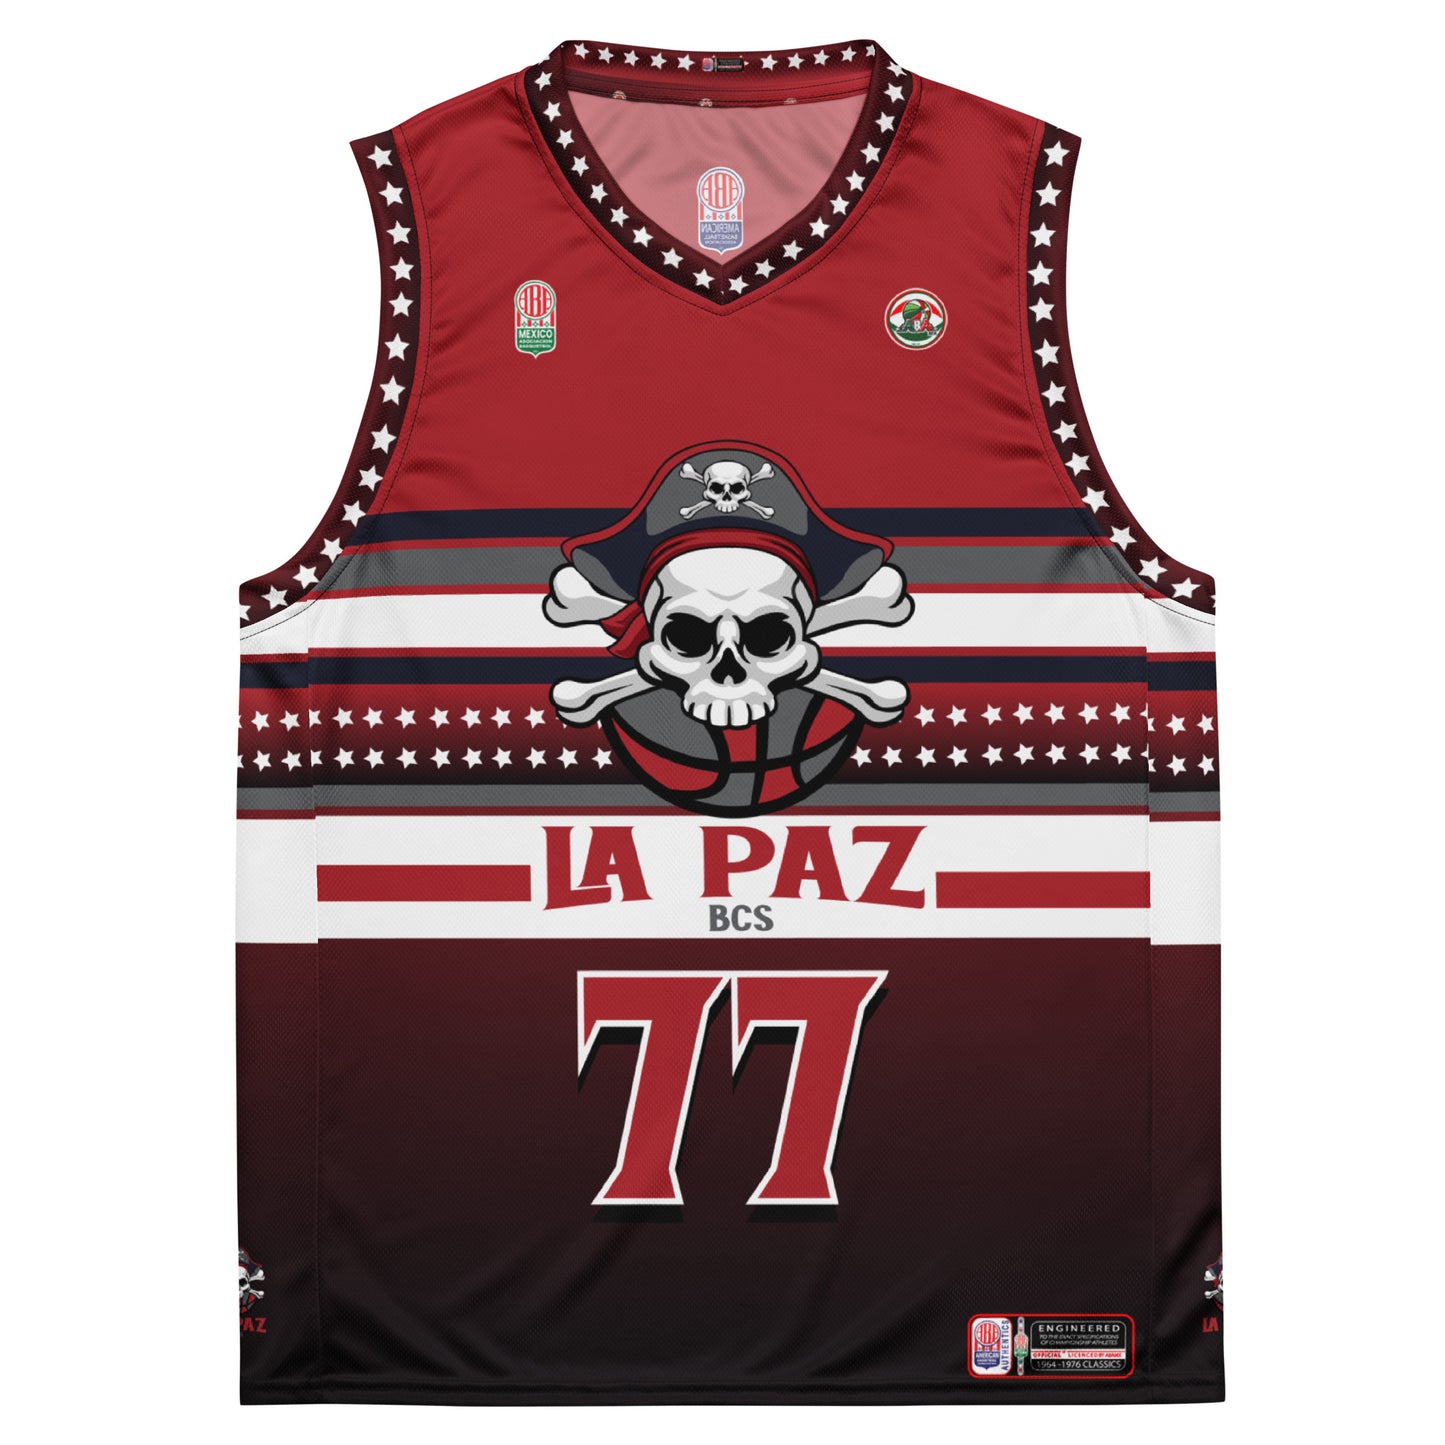 🔥La Paz ABA Mexico Basketball Team Jersey🔥